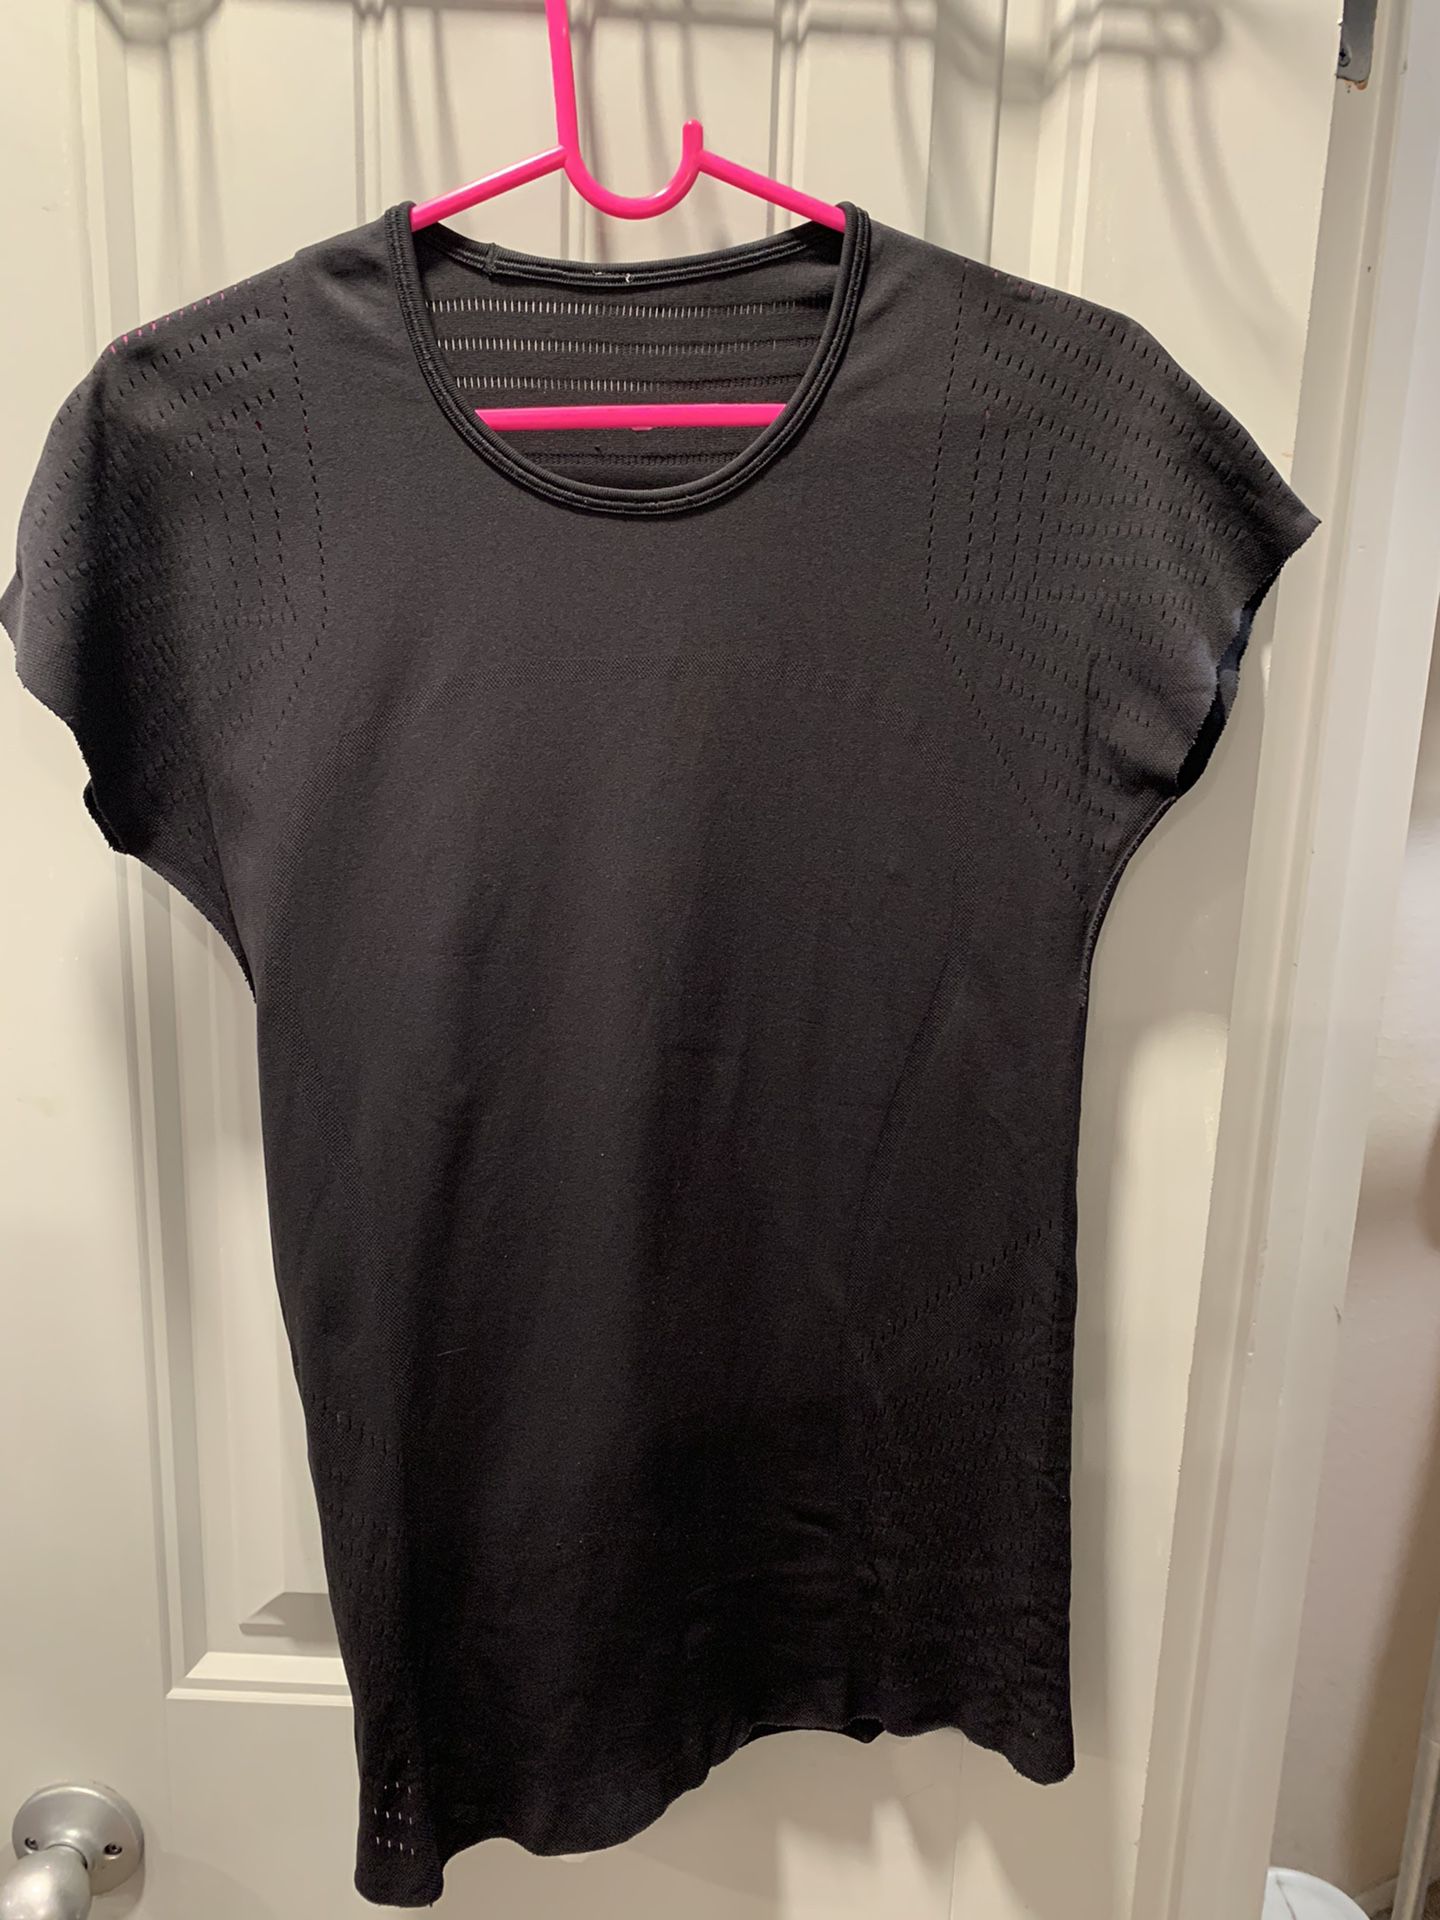 Lululemon Women’s Size 6 Black Shirt